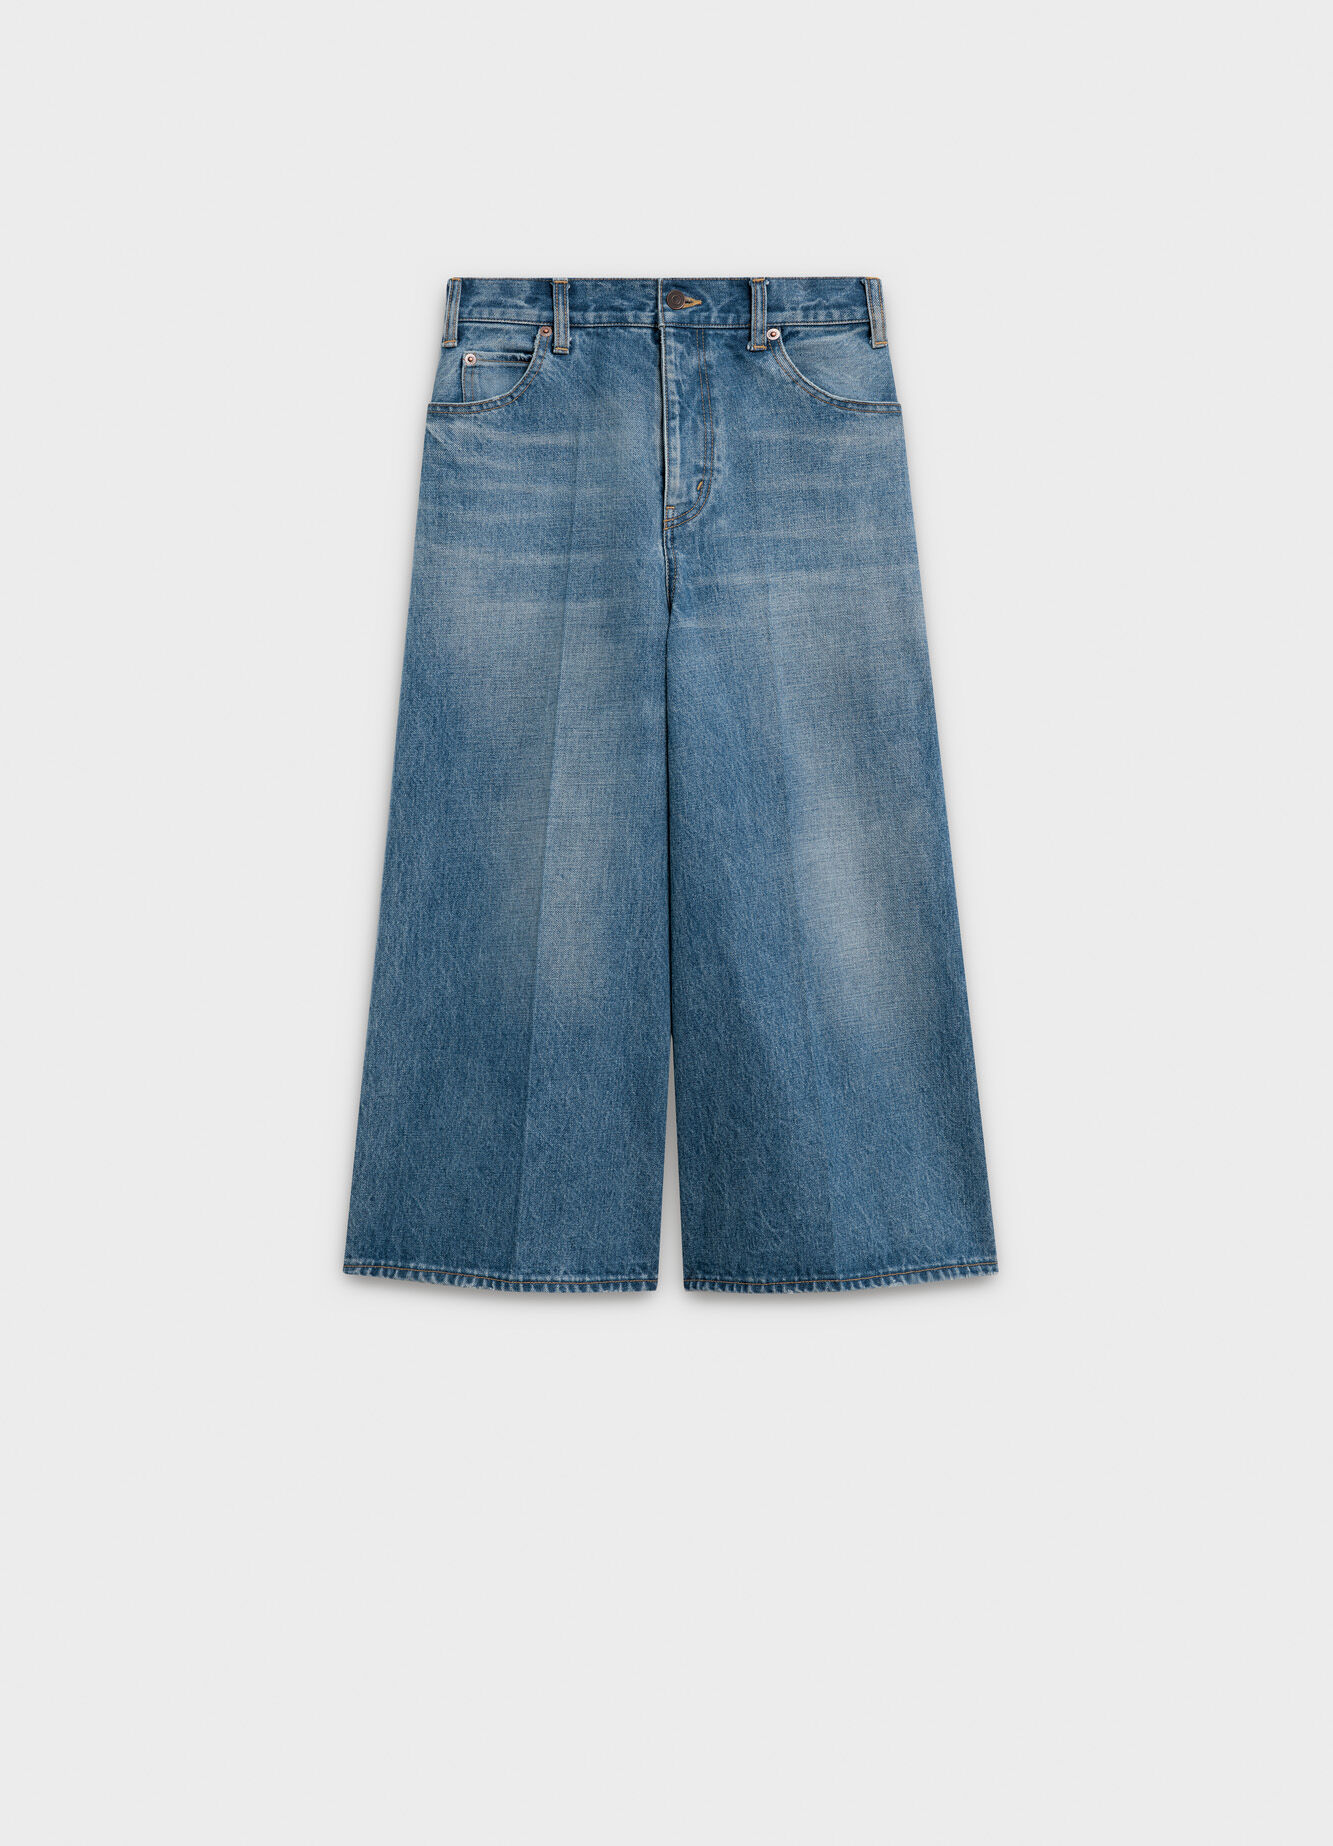 Buy > levis culotte jeans > in stock